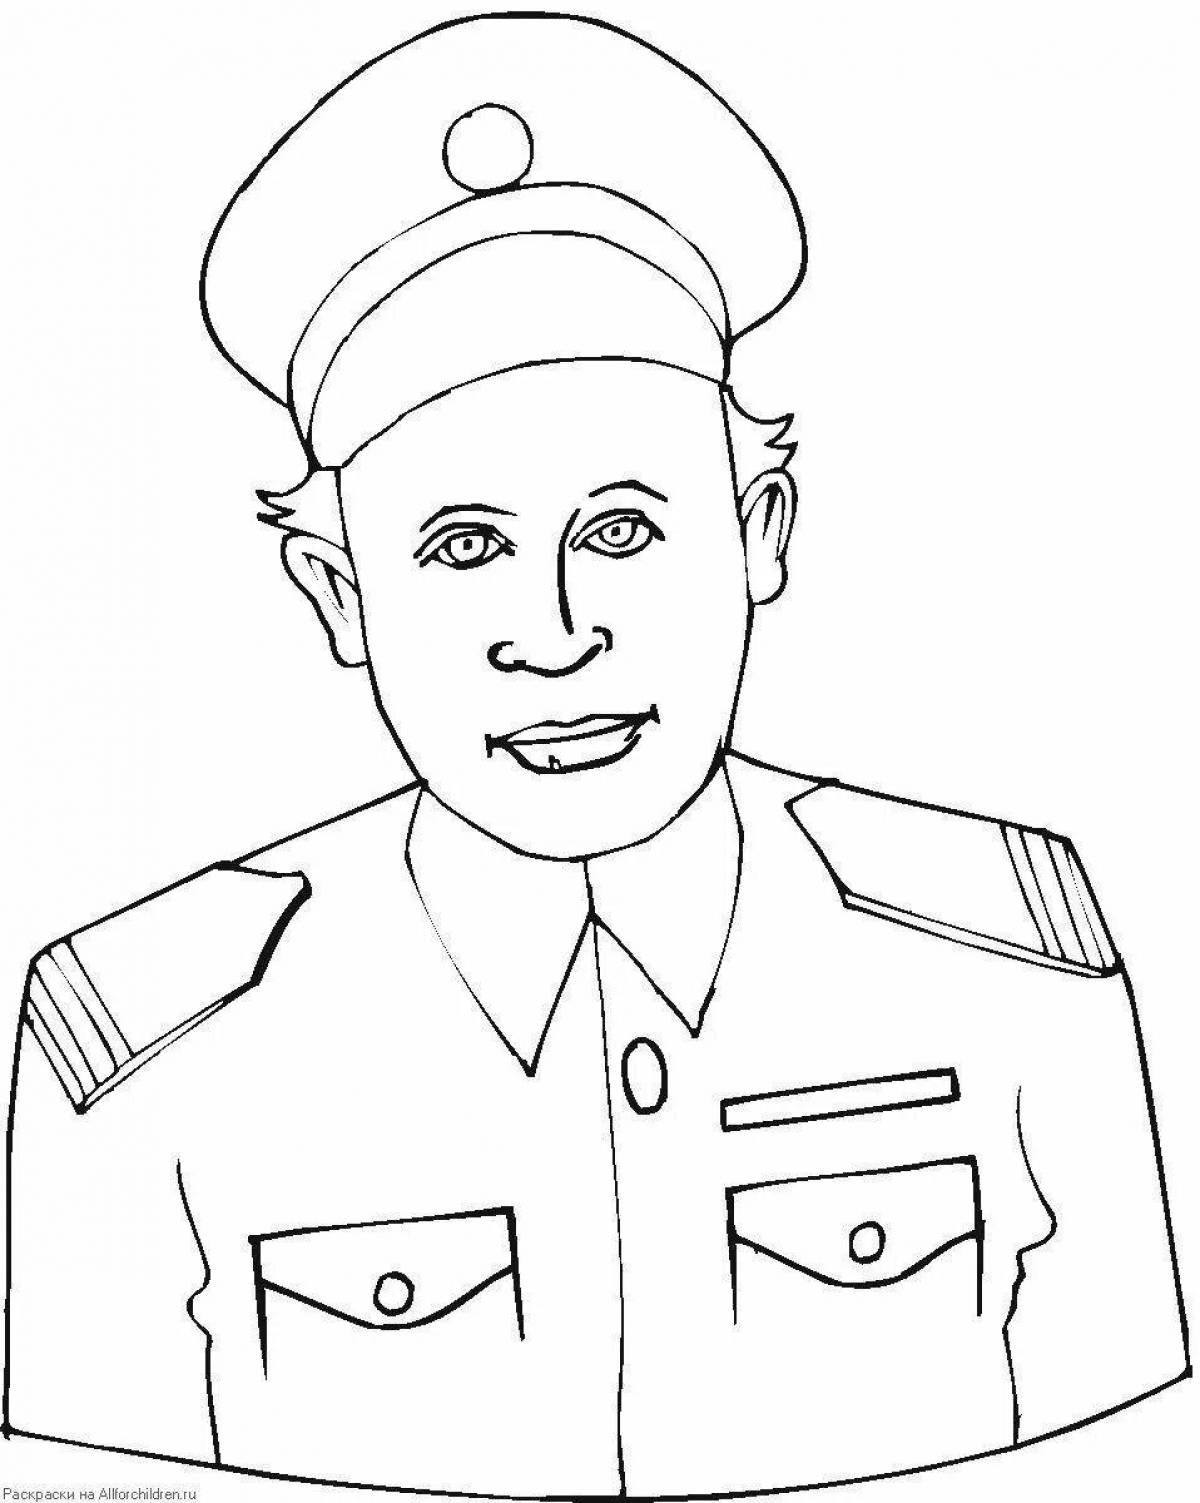 Fine military portrait coloring page